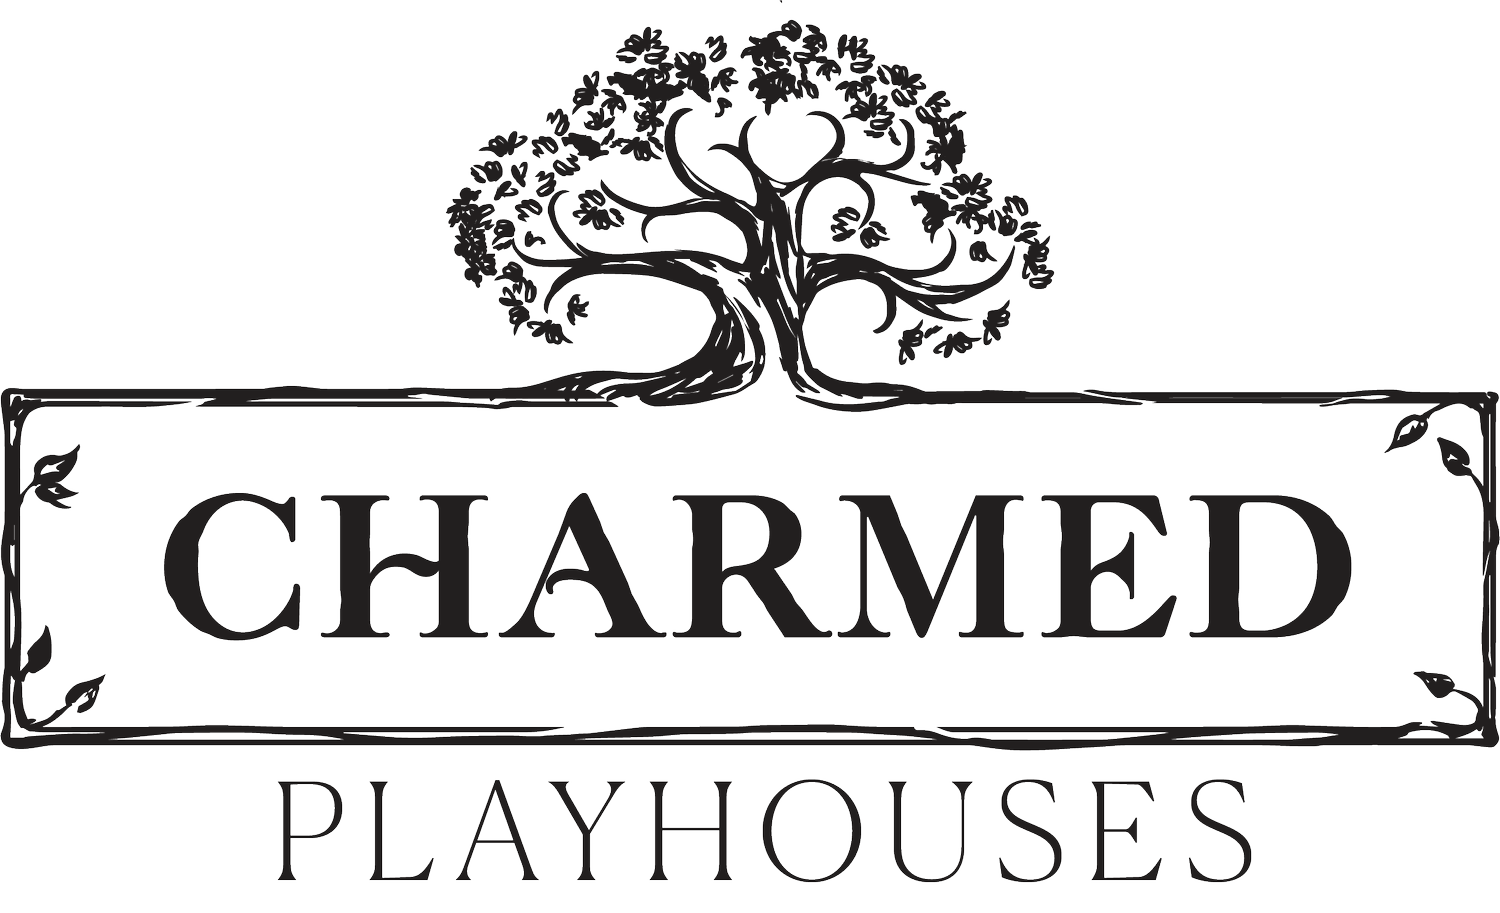 Charmed Playhouses